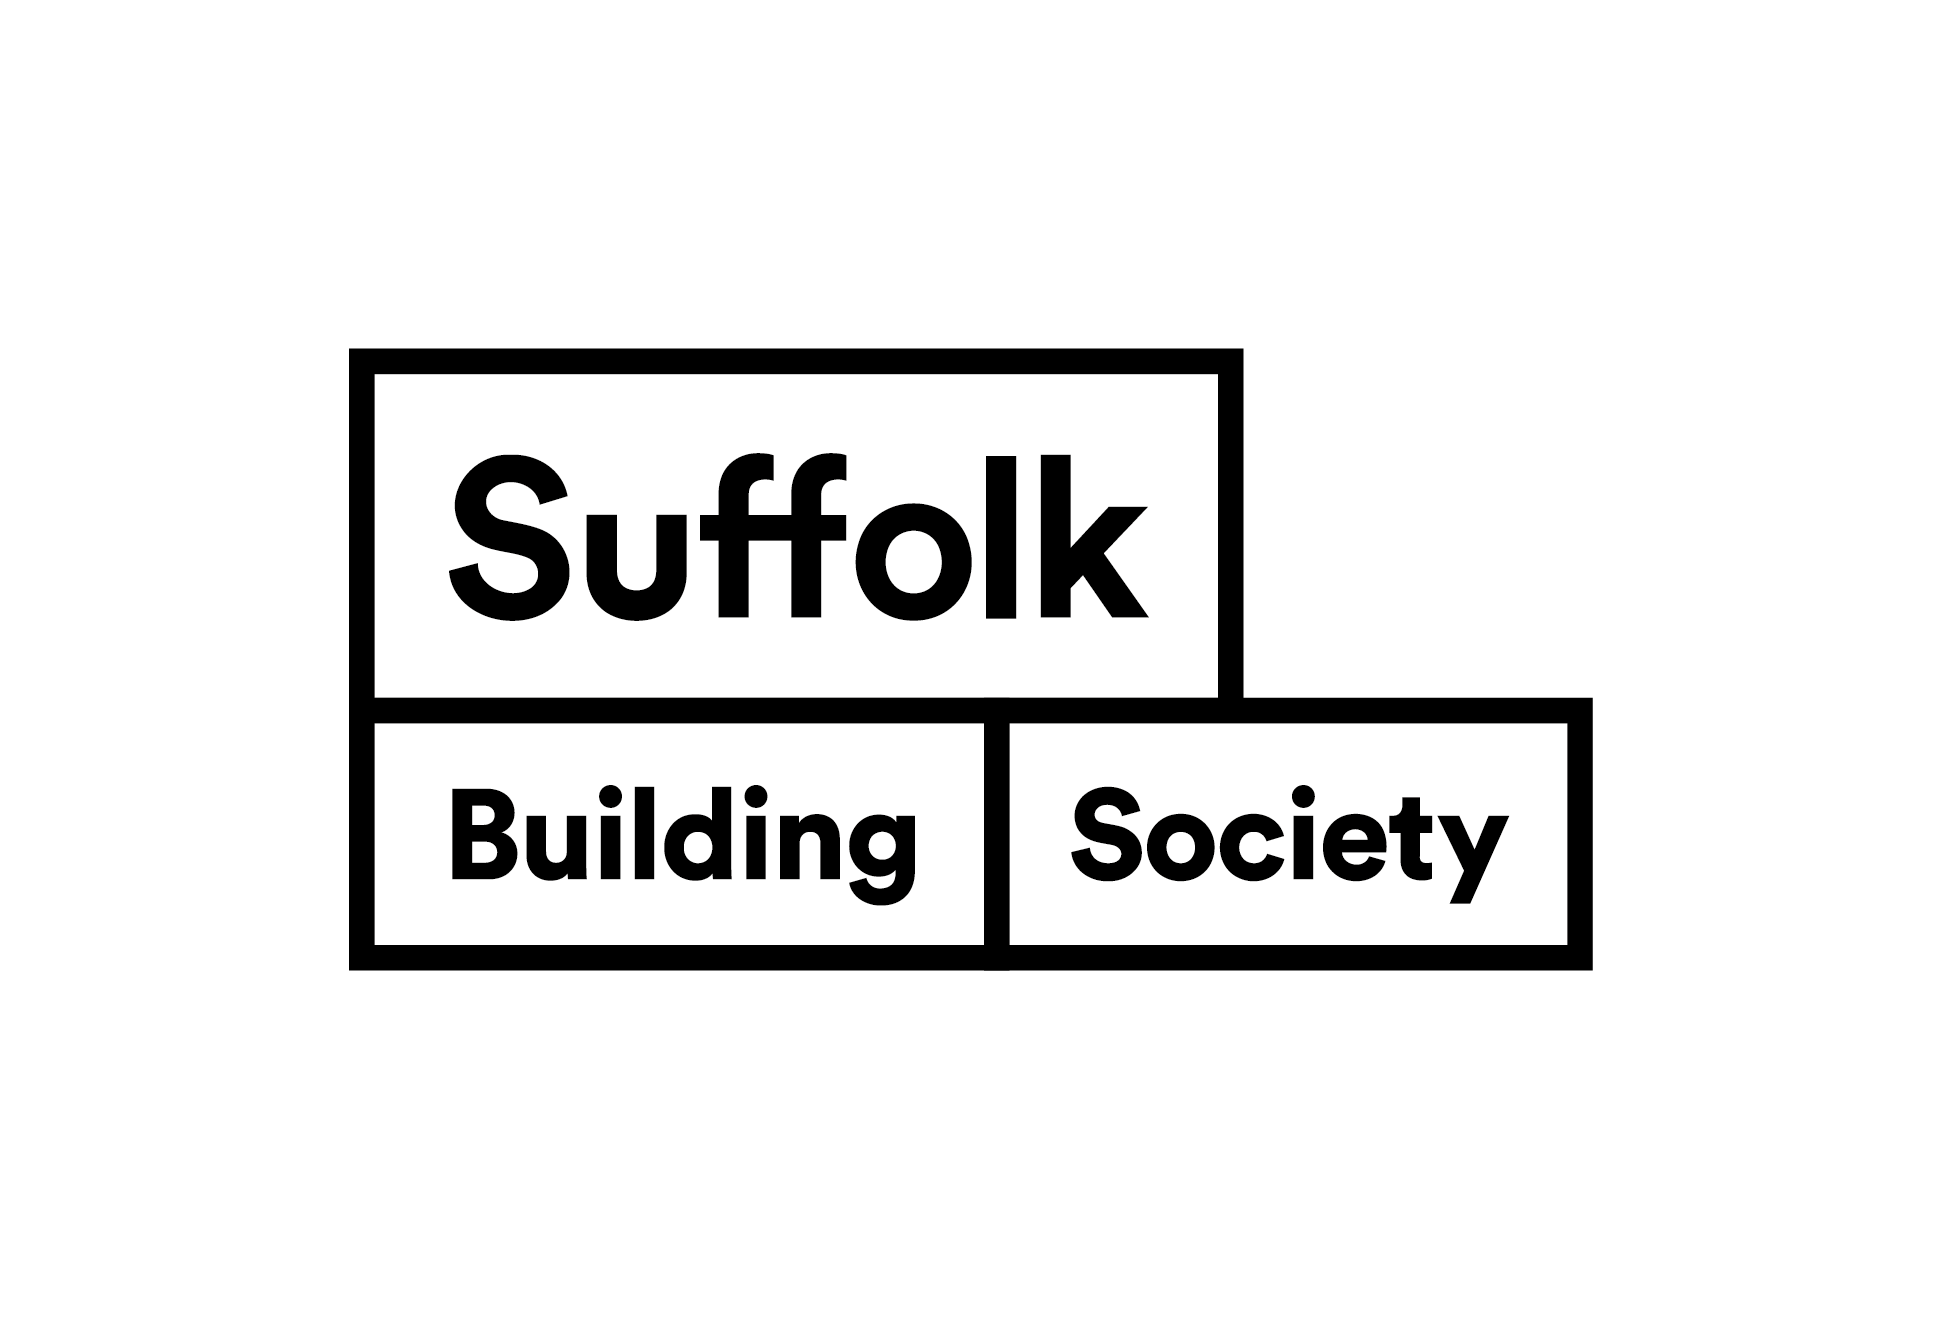 Suffolk Building Society logo